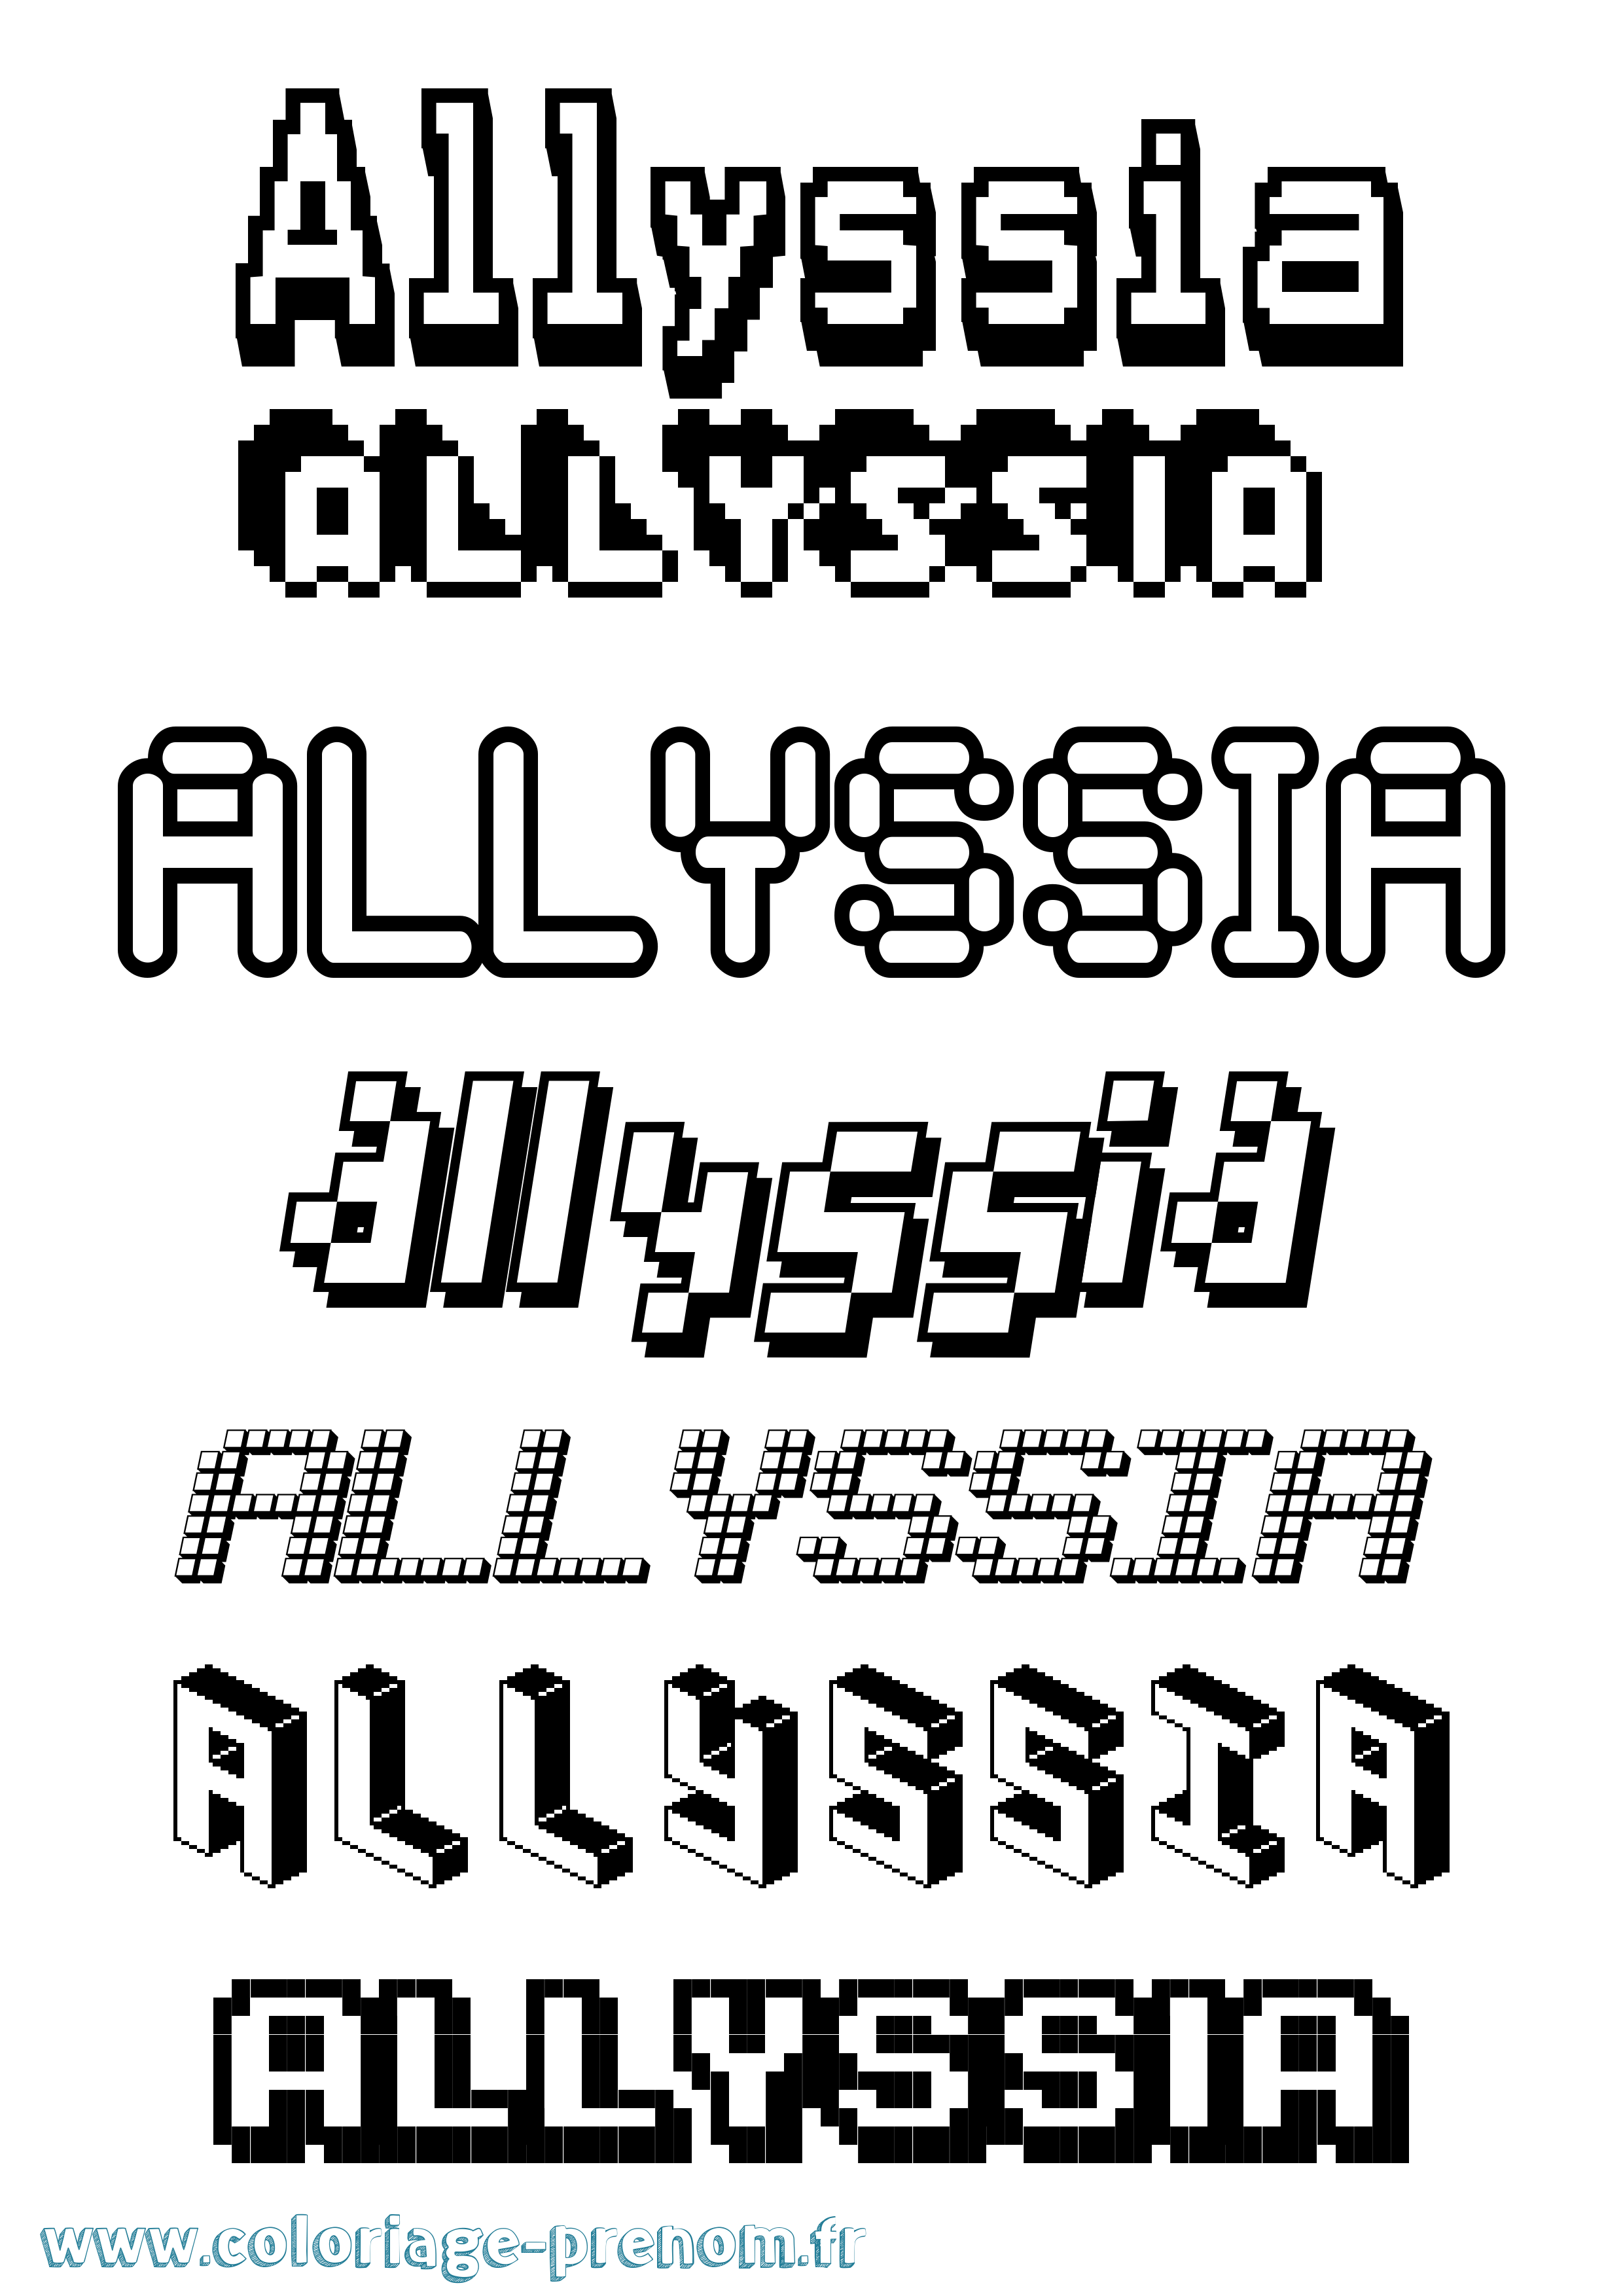 Coloriage prénom Allyssia Pixel